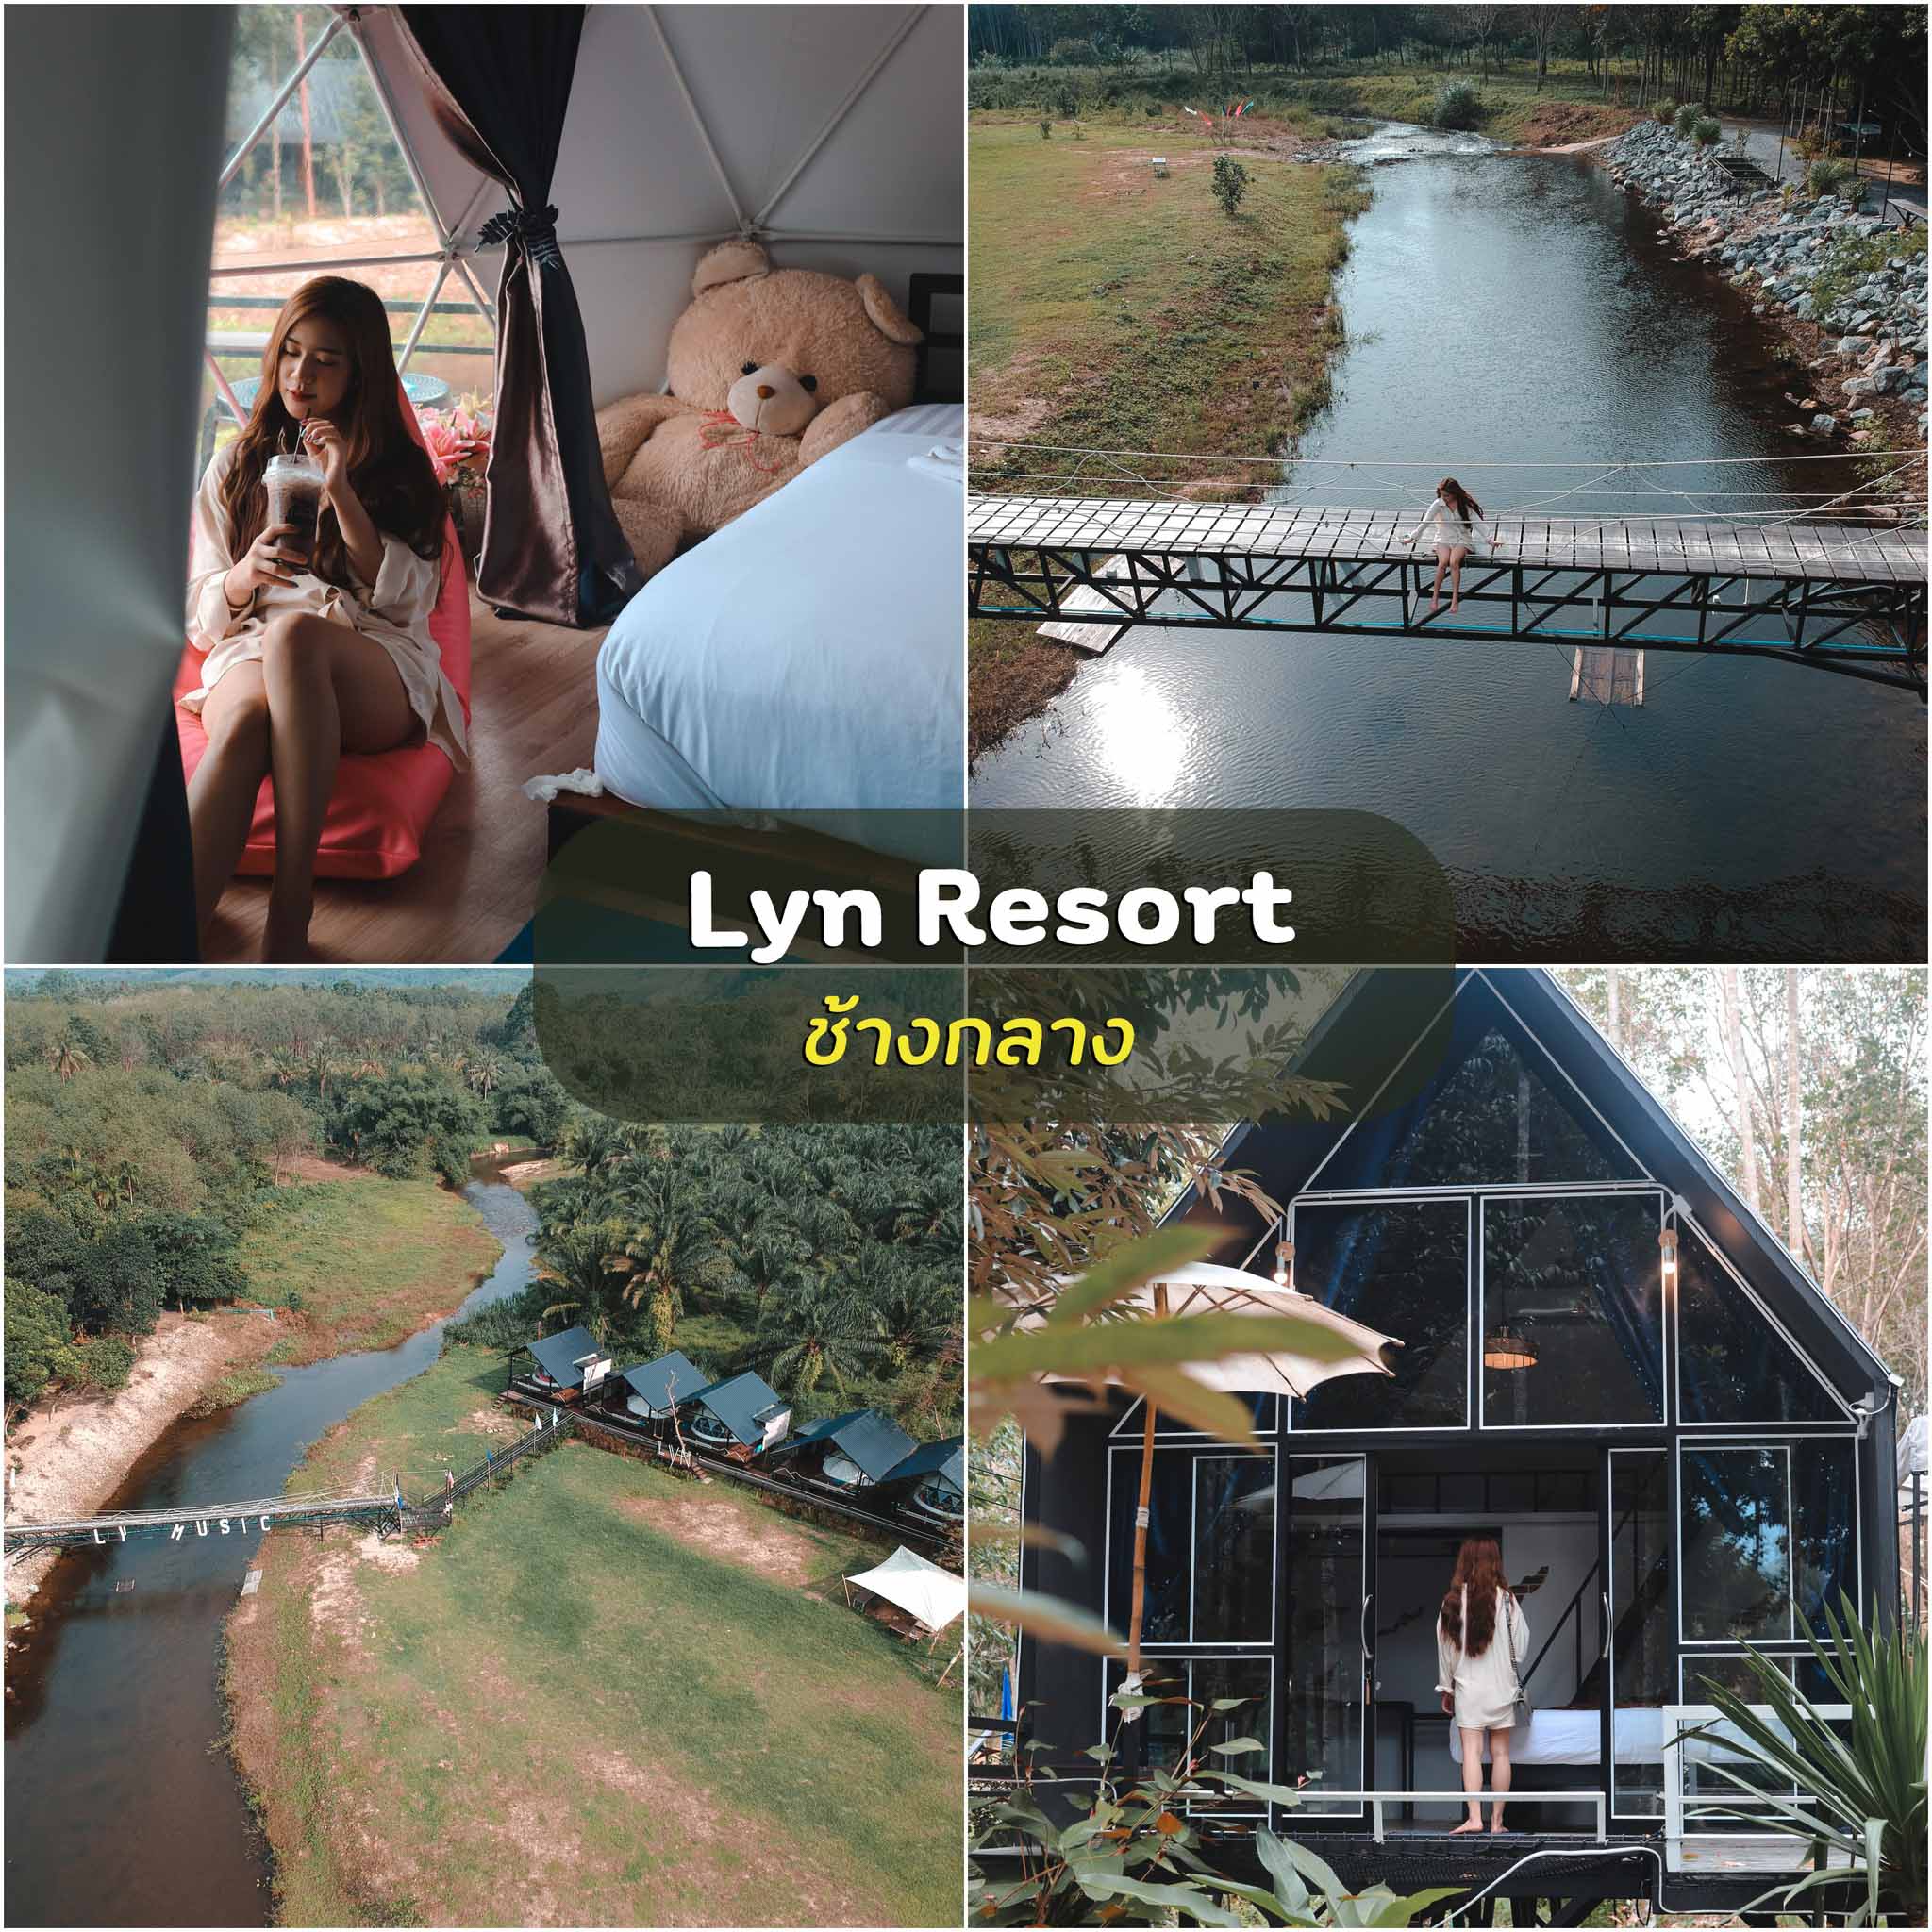 Lyn-Resort -อีกหนึ่งจุดเช็คอินสวยๆ-ช้างกลาง-นครศรีธรรมราช-มีทั้งที่พัก-คาเฟ่เลยย-
 ที่เที่ยวธรรมชาตินครศรีธรรมราช,นครศรี,จุดเช็คอิน,ที่พัก